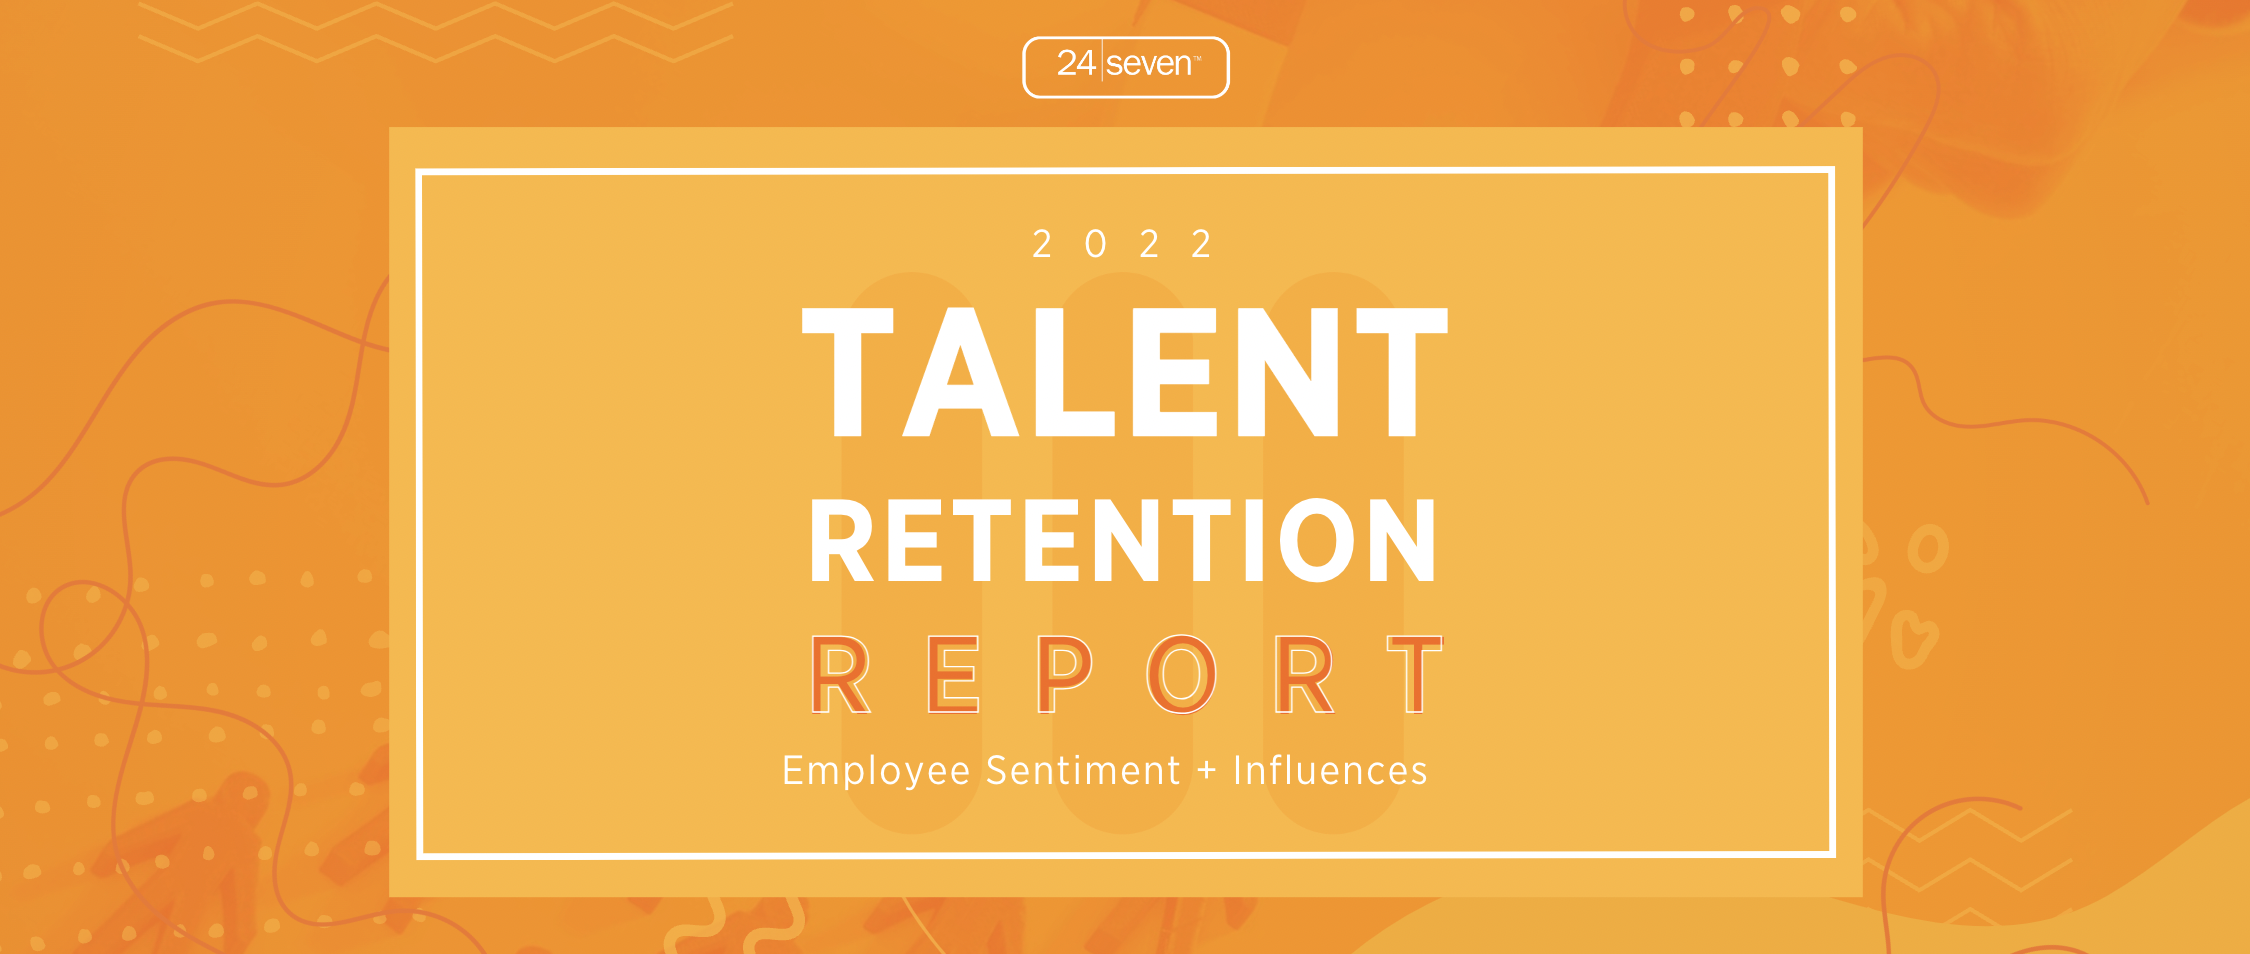 2022 Talent Retention Report 